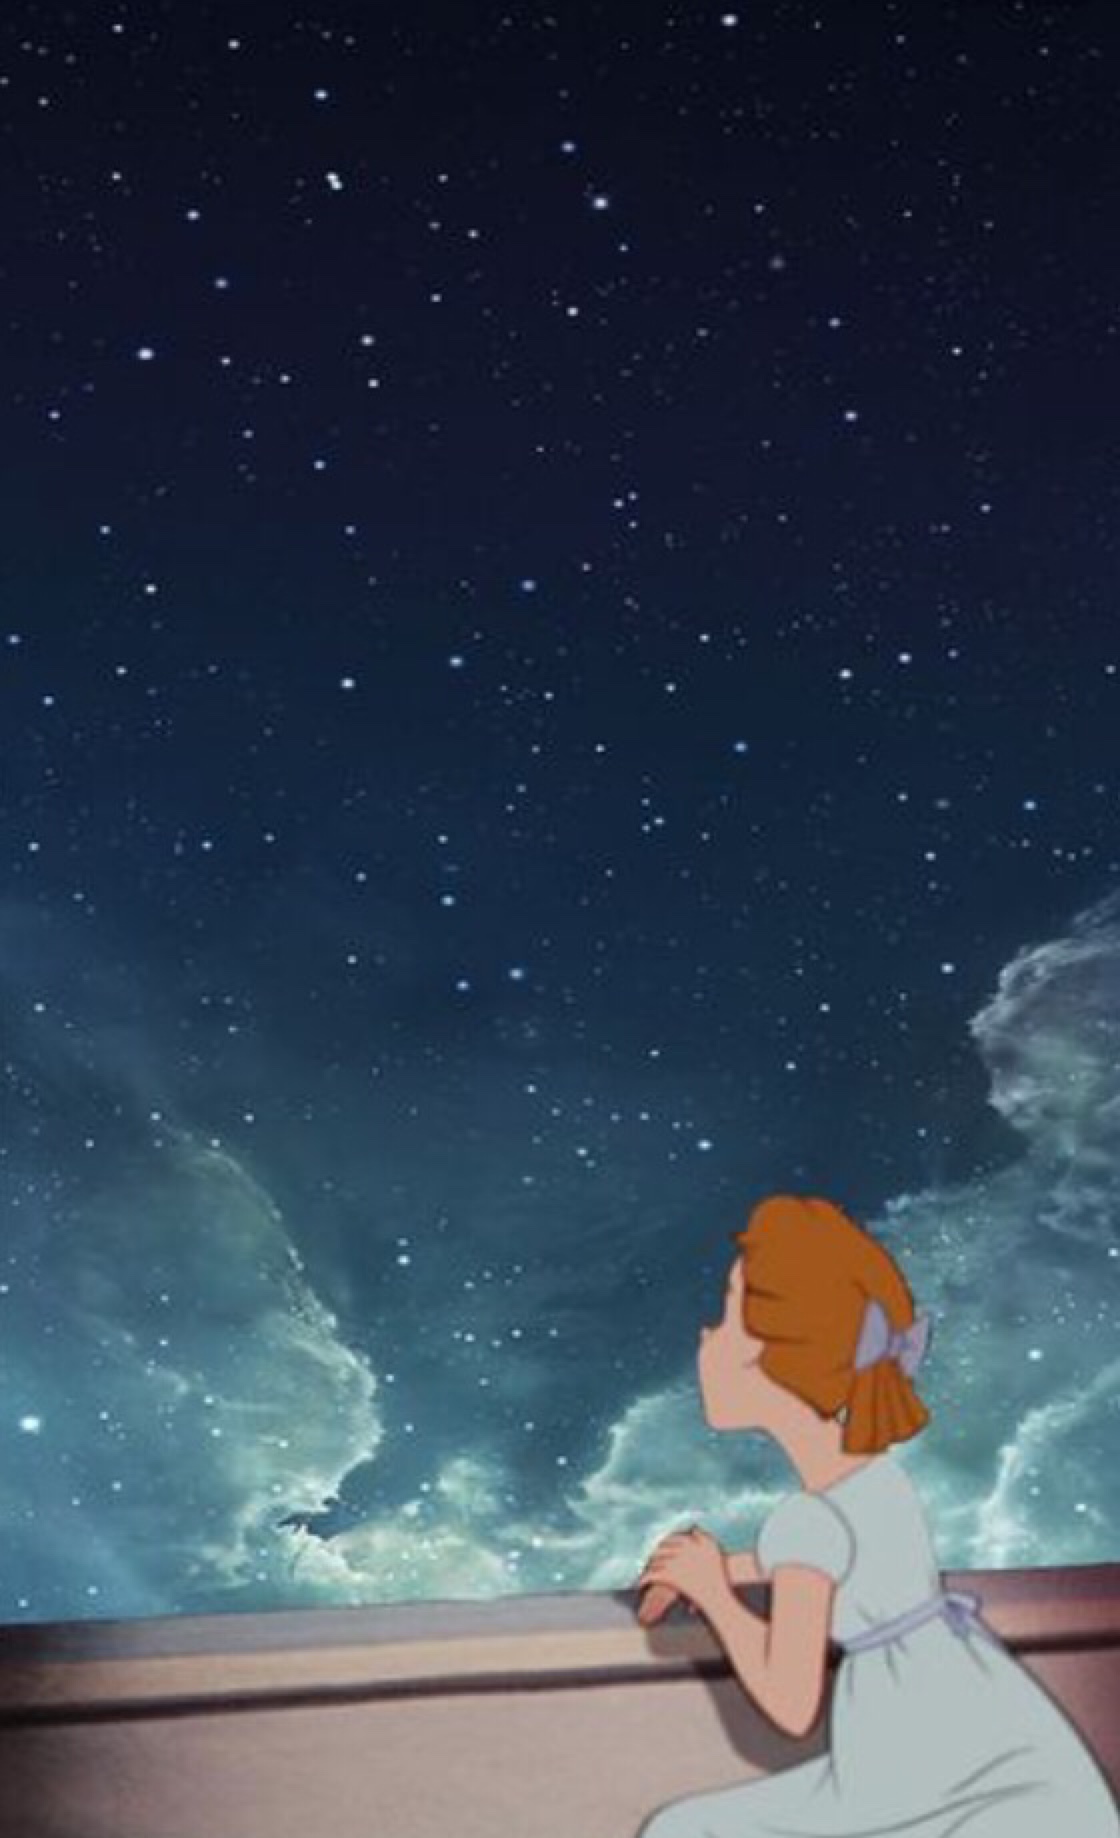 Disney Wallpaper For Iphone 5 - Peter Pan Phone Background - HD Wallpaper 